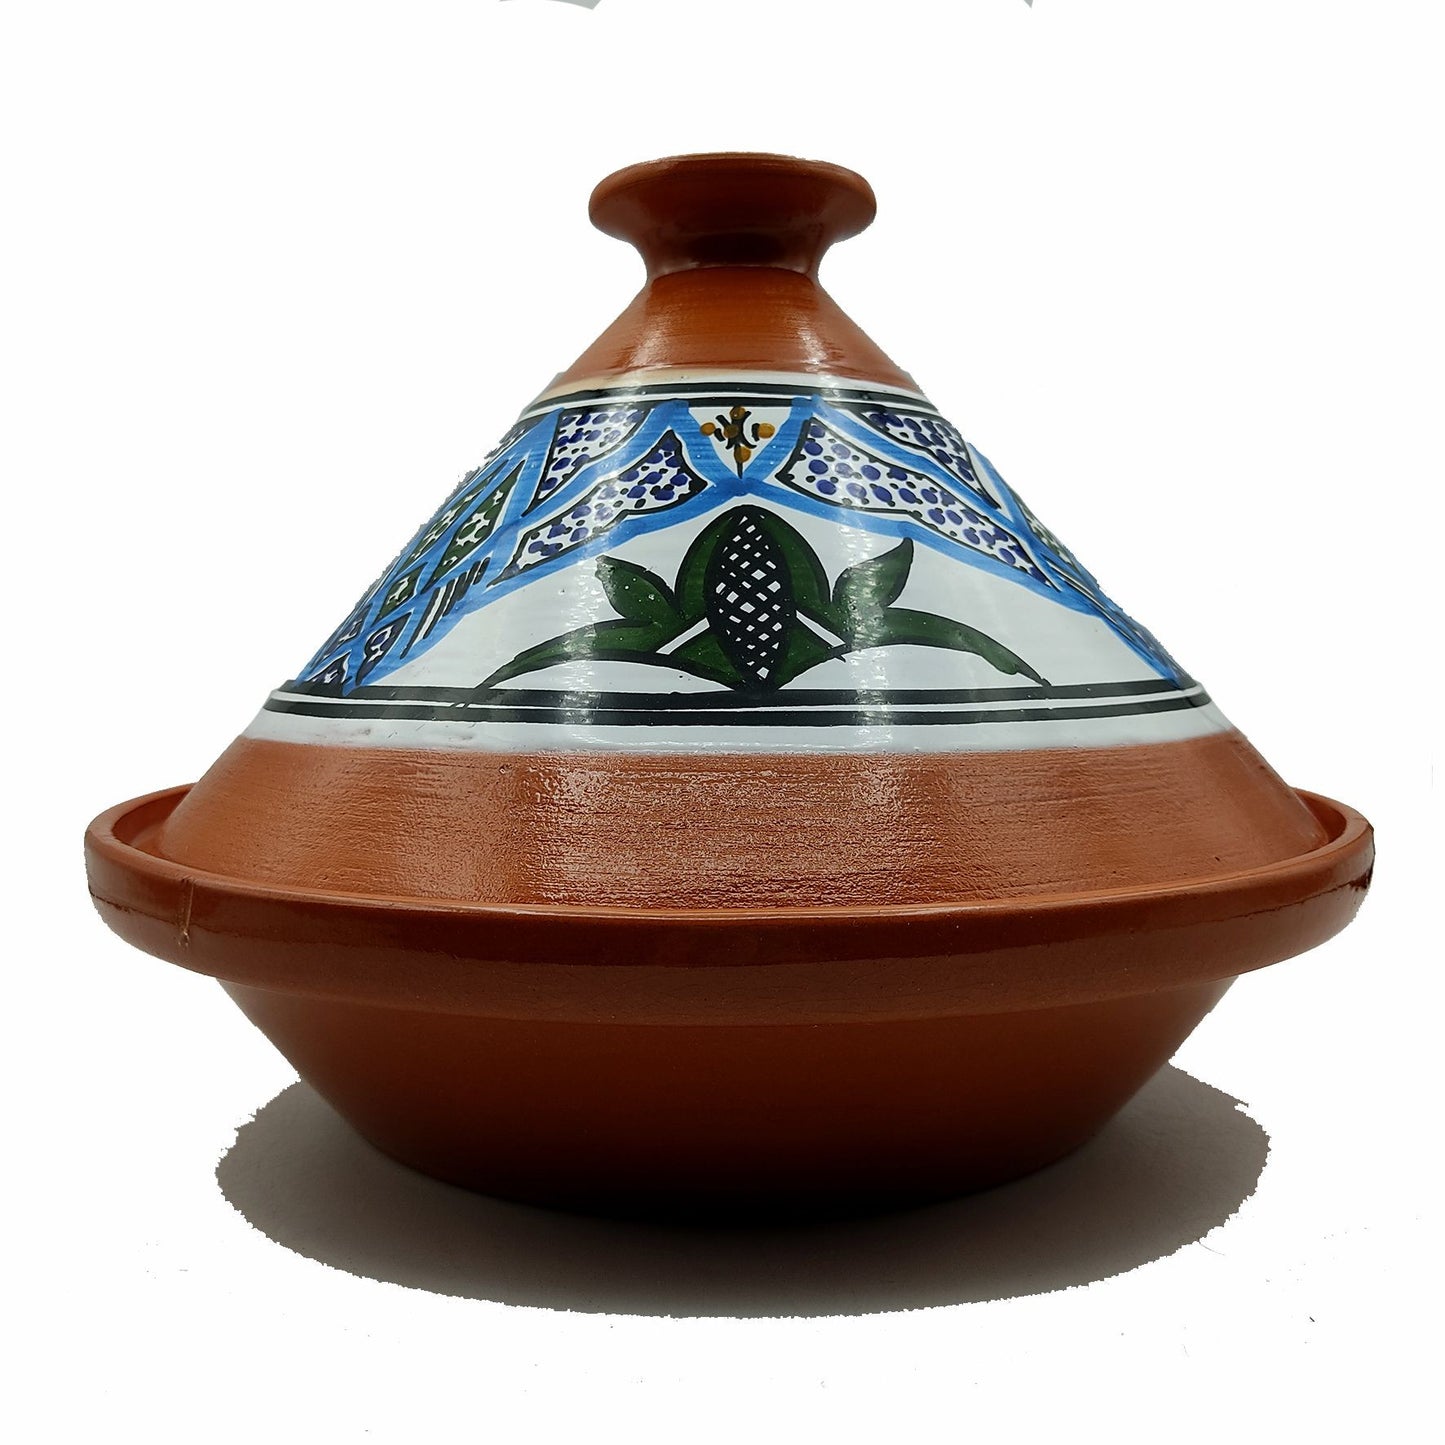 Tajine Terracotta Pot Etnisch Marokkaanse Tunesische Schaal XL 32cm 0907211203